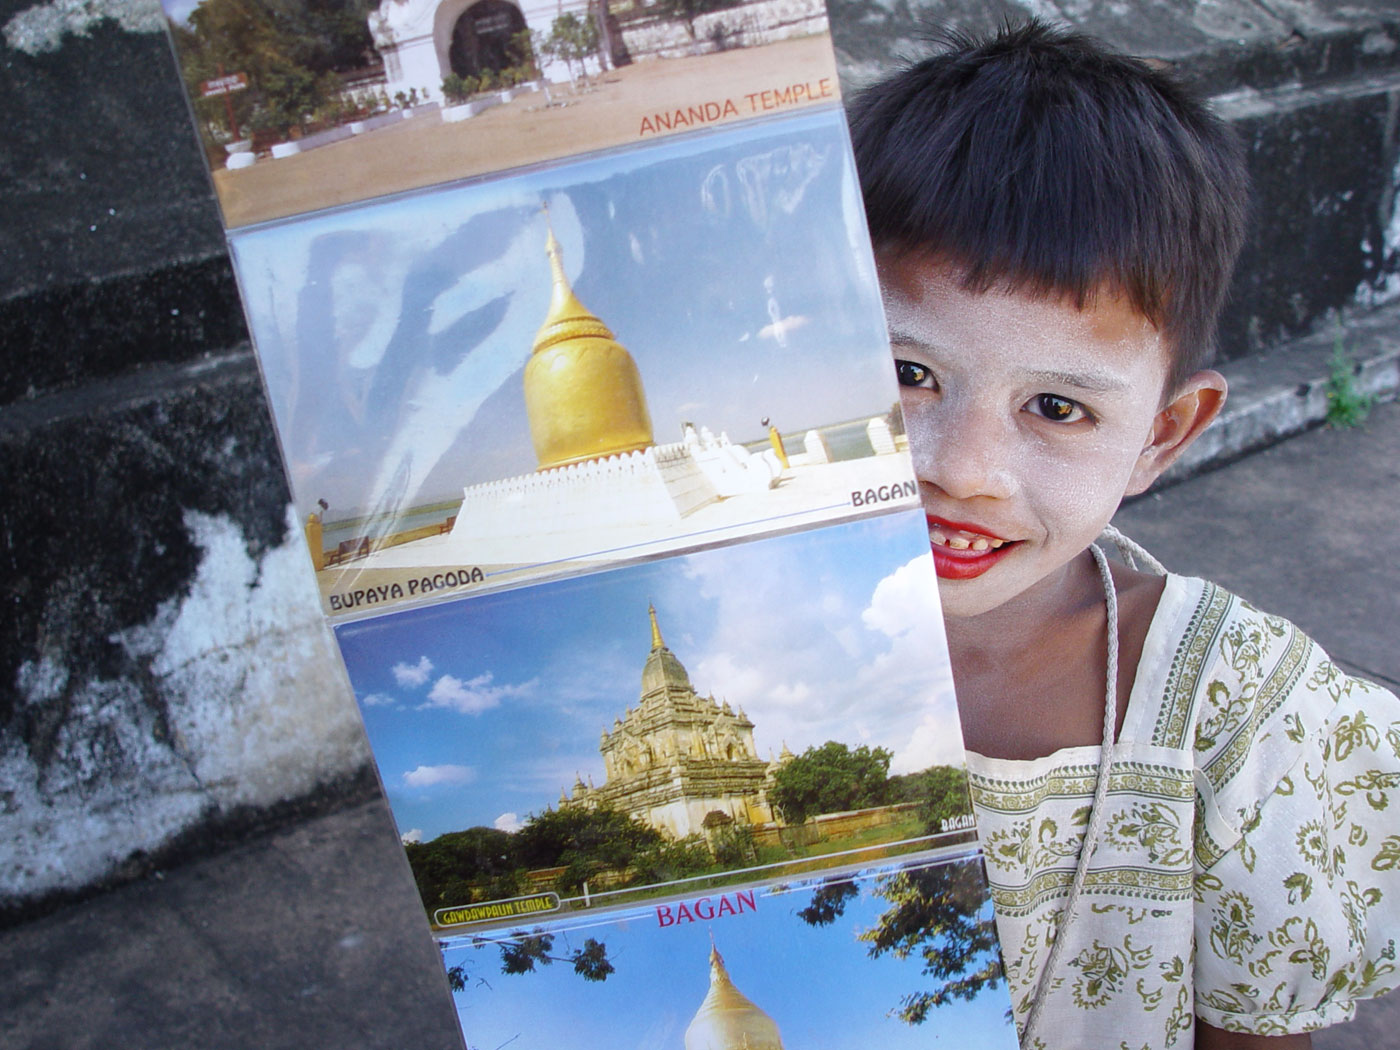 Selling postcards, Bagan, 2005